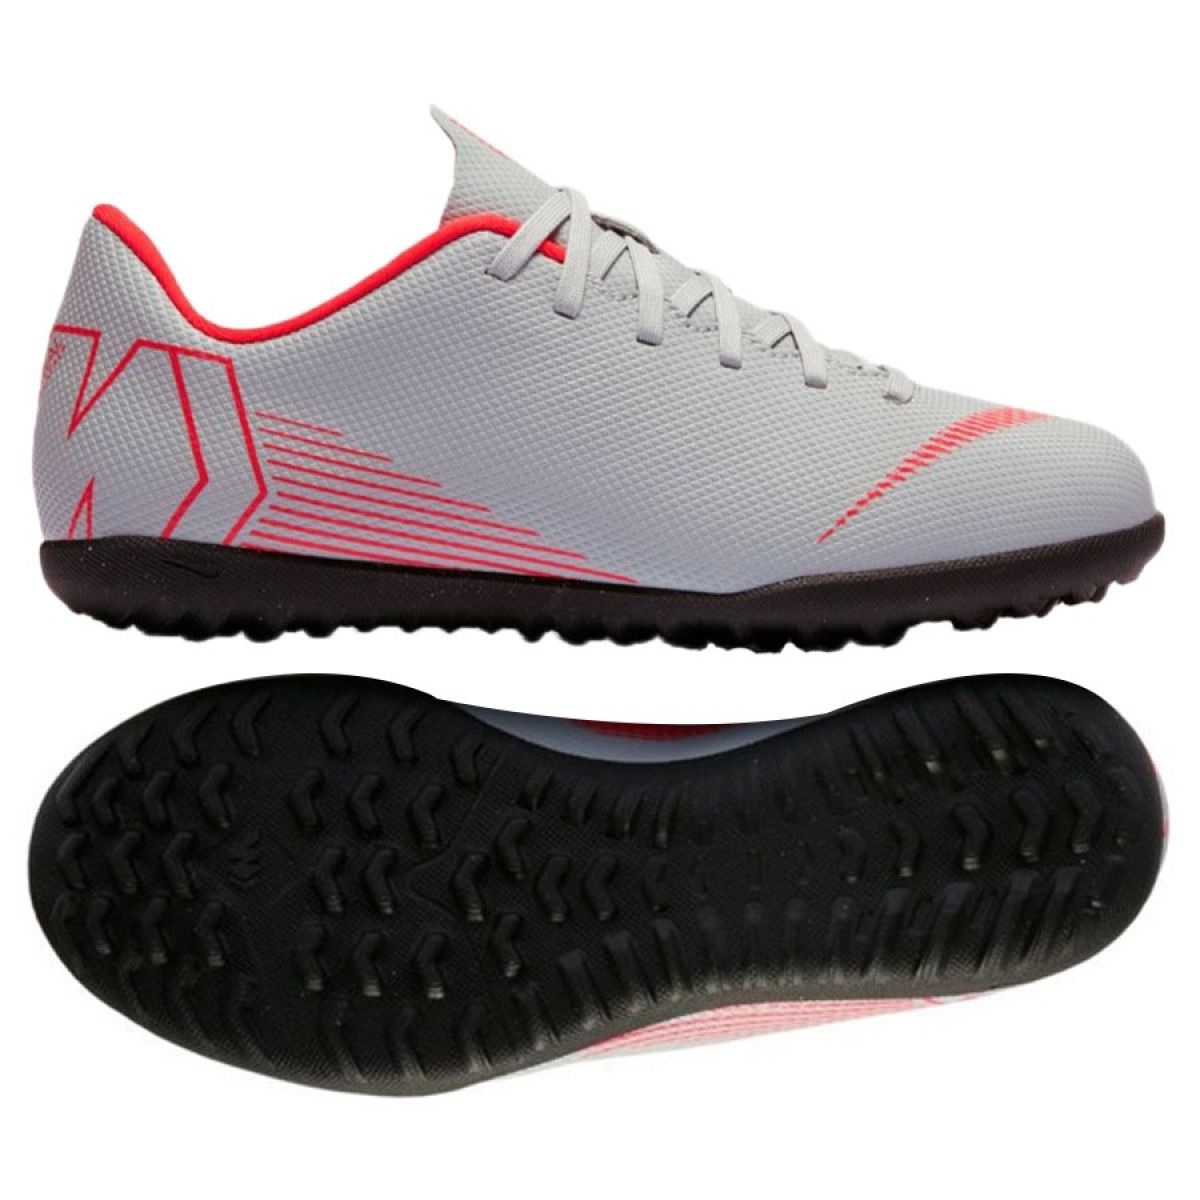 Buty piłkarskie Nike Mercurial VaporX 12 club Tf Gs Jr AH7355-060 białe wielokolorowe